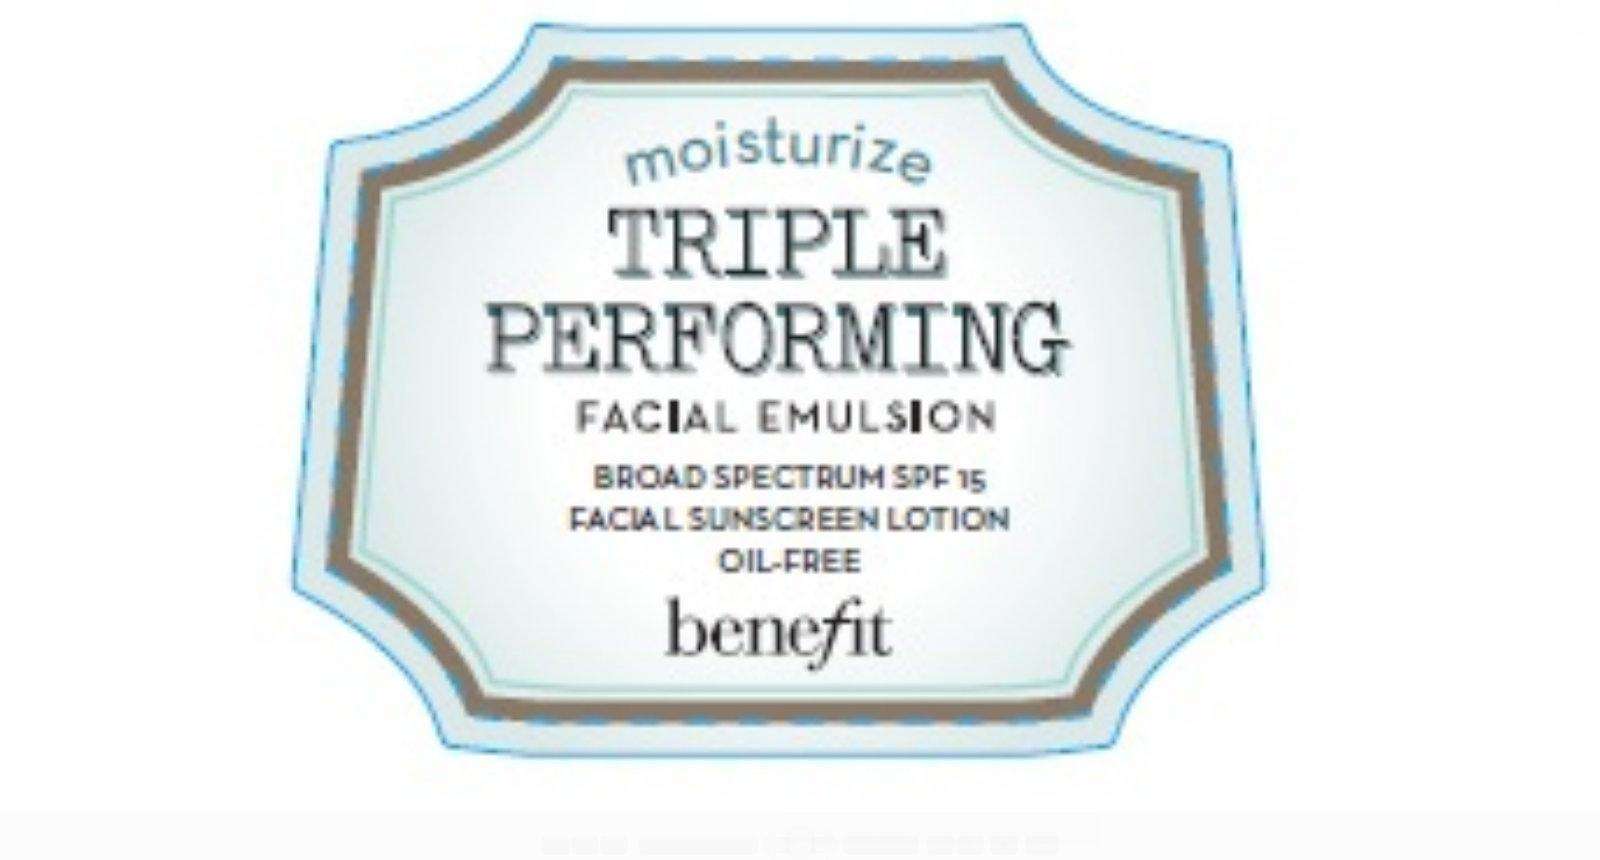 Benefit Triple Performing Facial Emulsion Broad Spectrum SPF 15